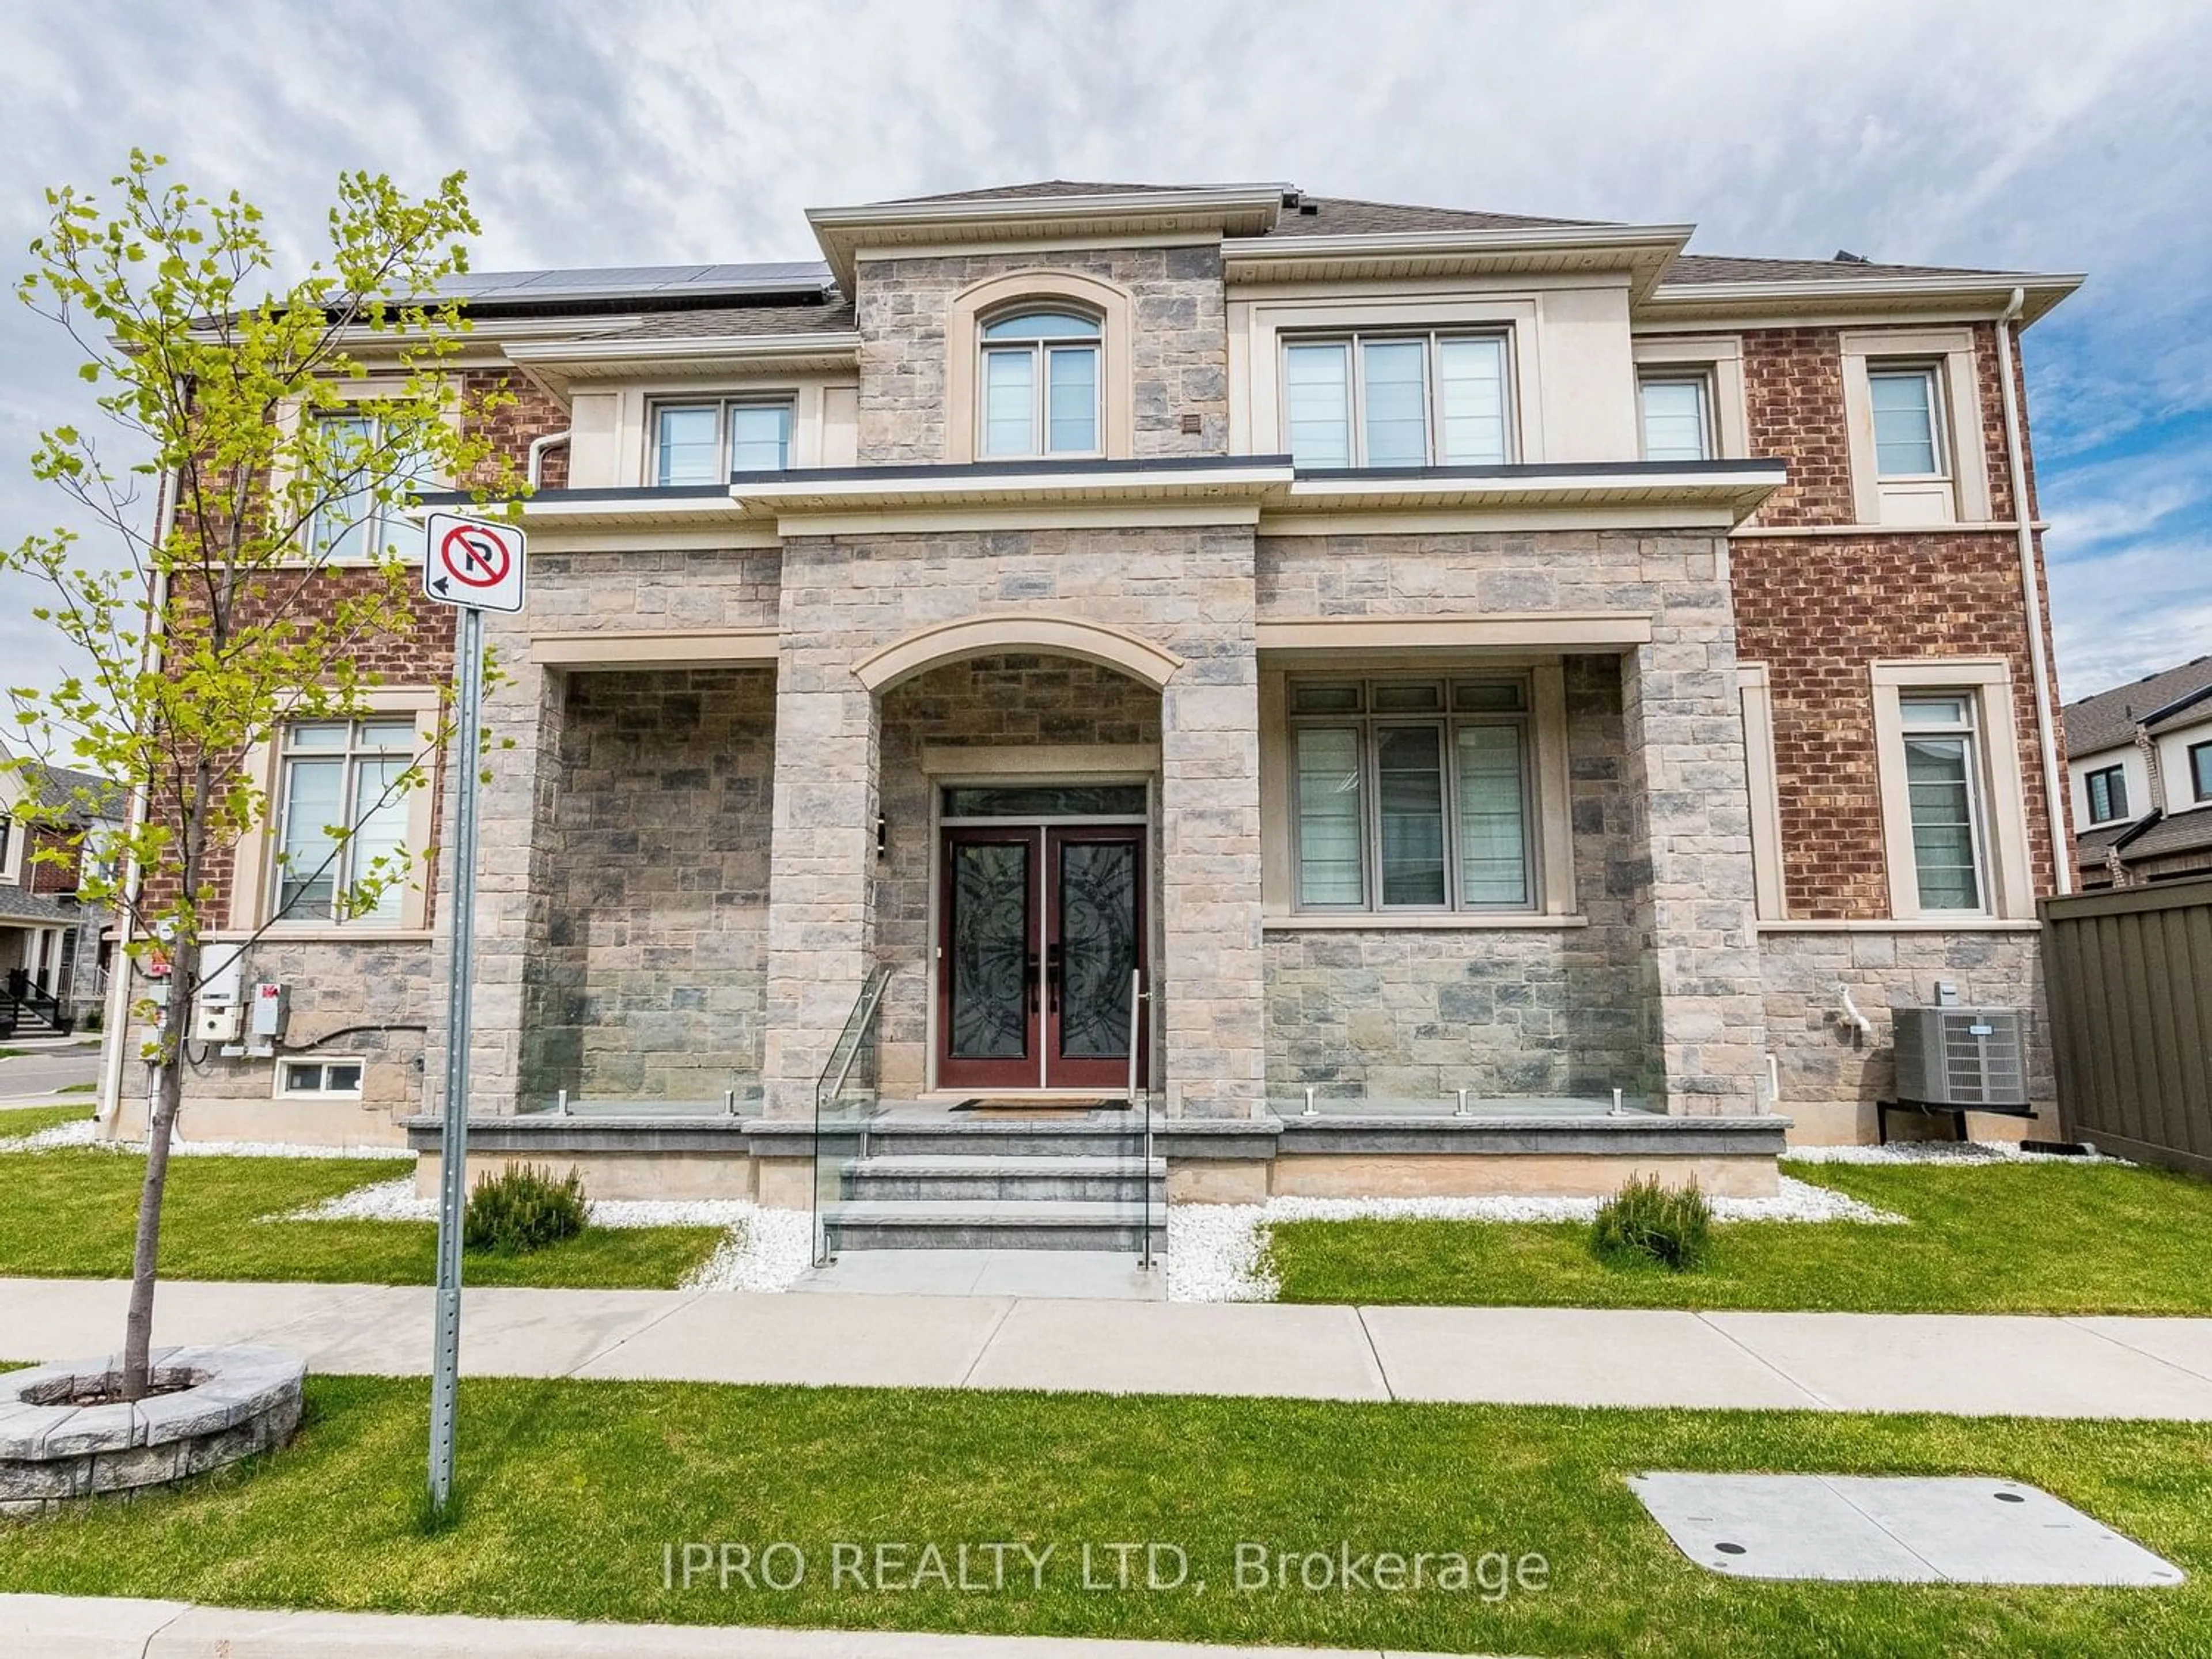 Home with brick exterior material for 1155 Hamman Way, Milton Ontario L9E 1K2